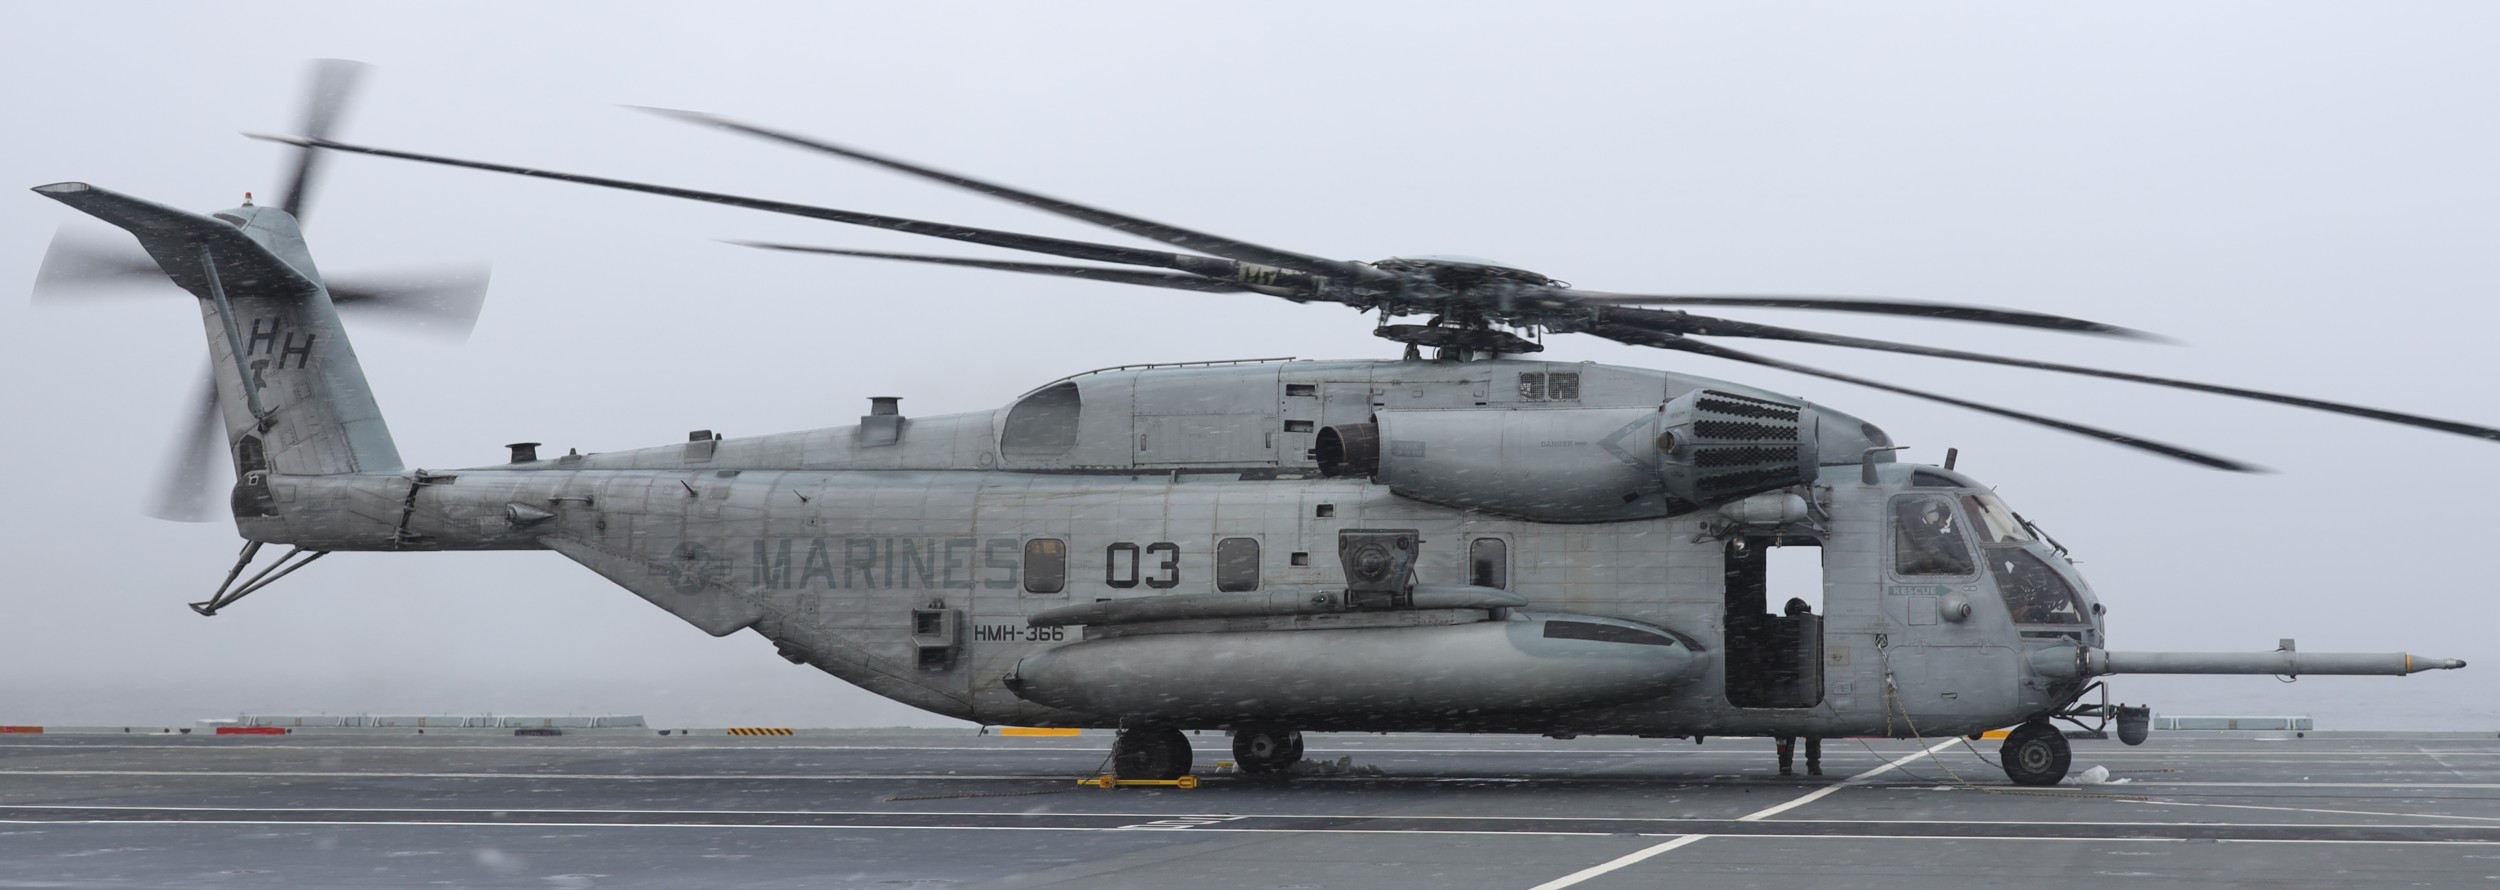 hmh-366 hammerheads ch-53e super stallion marine heavy helicopter squadron hms prince of wales nato 165